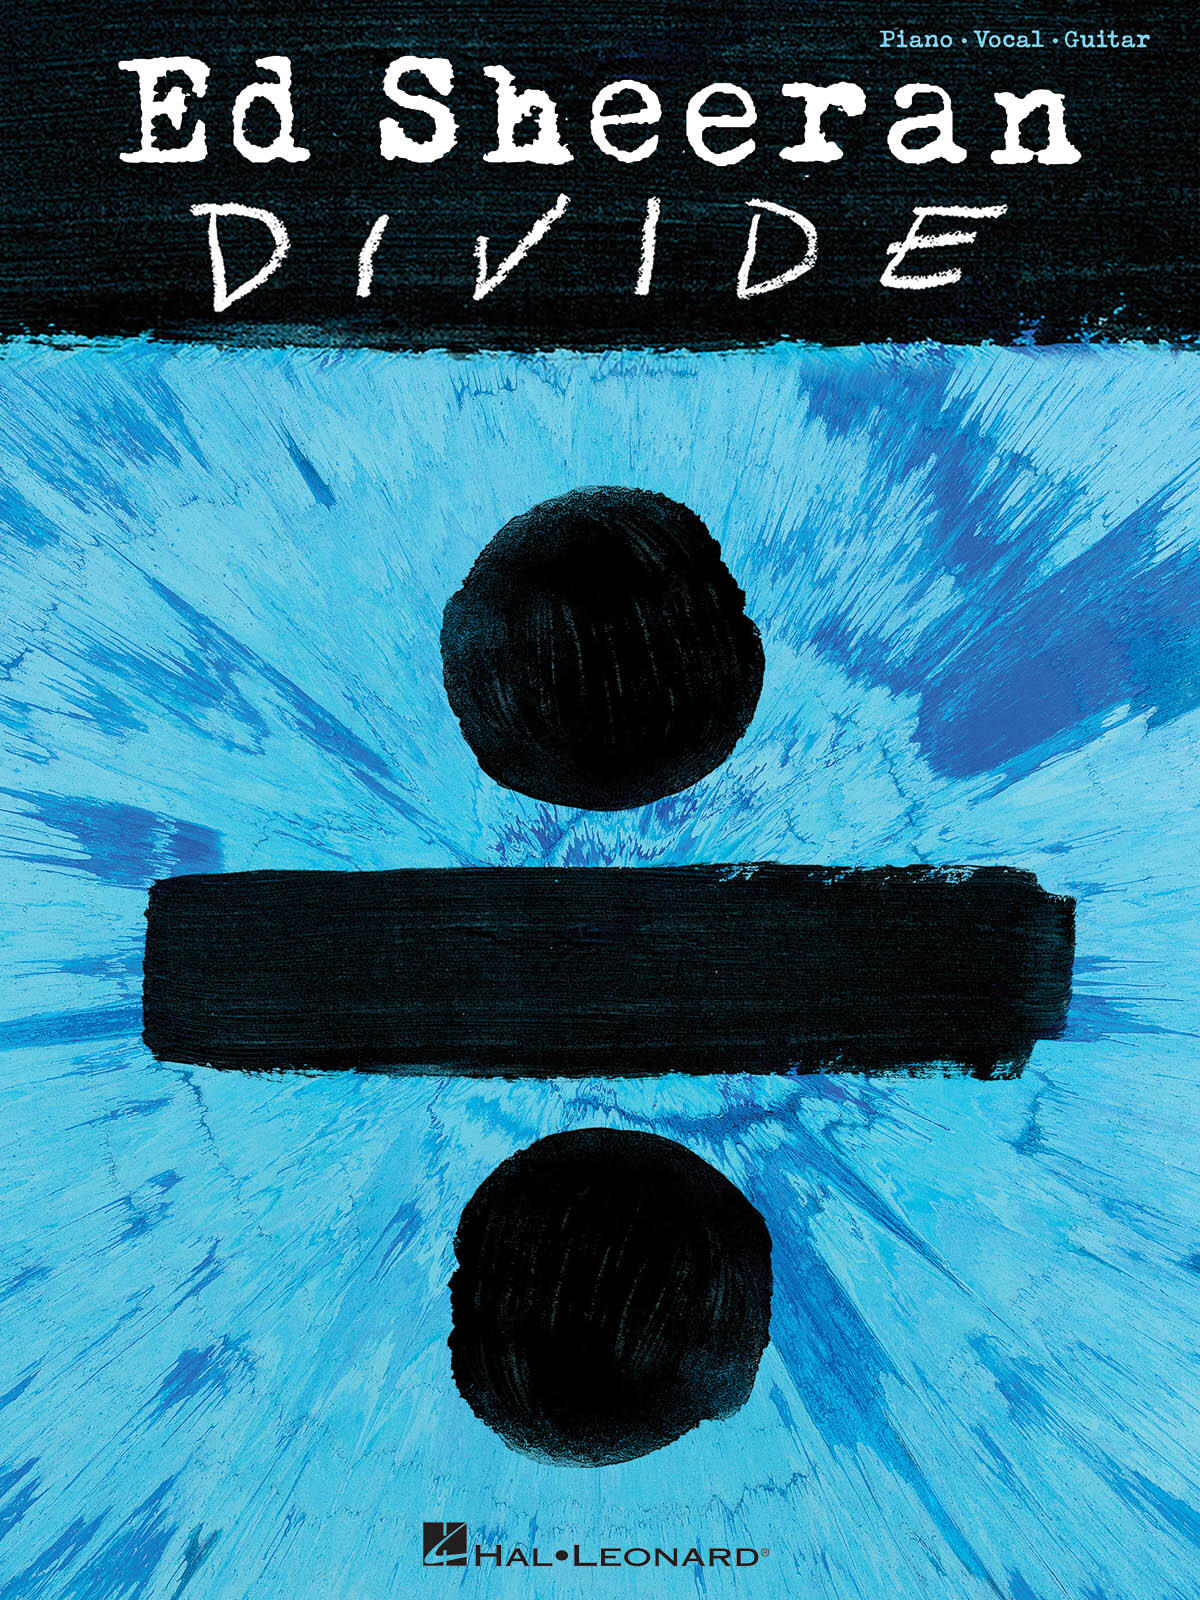 Ed Sheeran - Divide PVG Songbook : photo 1